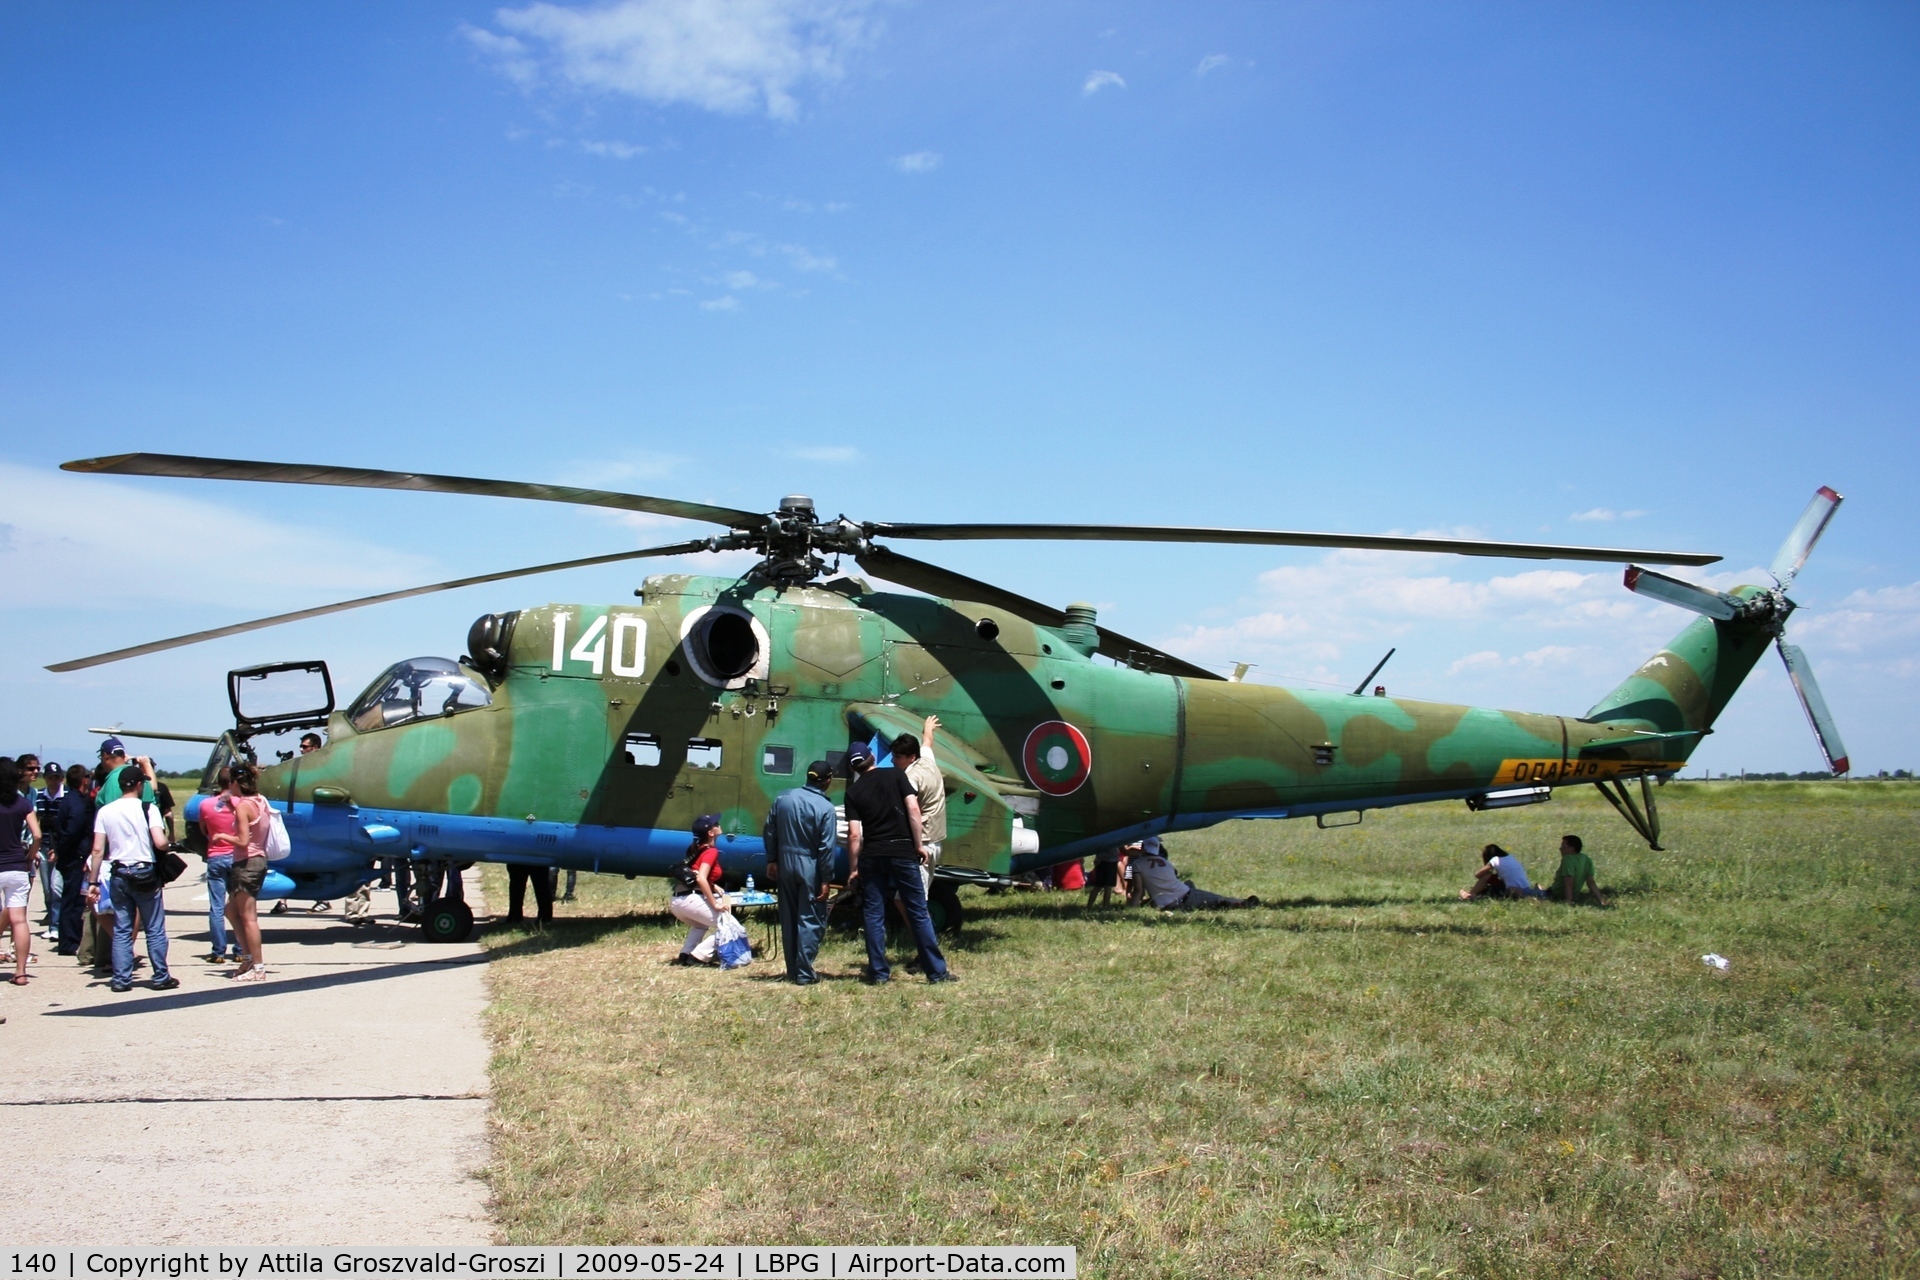 140, 1997 Mil Mi-24V Hind E C/N 150722, BIAF 09 Bulgaria Plovdiv (Krumovo) LBPG Graf Ignatievo Military Air Base